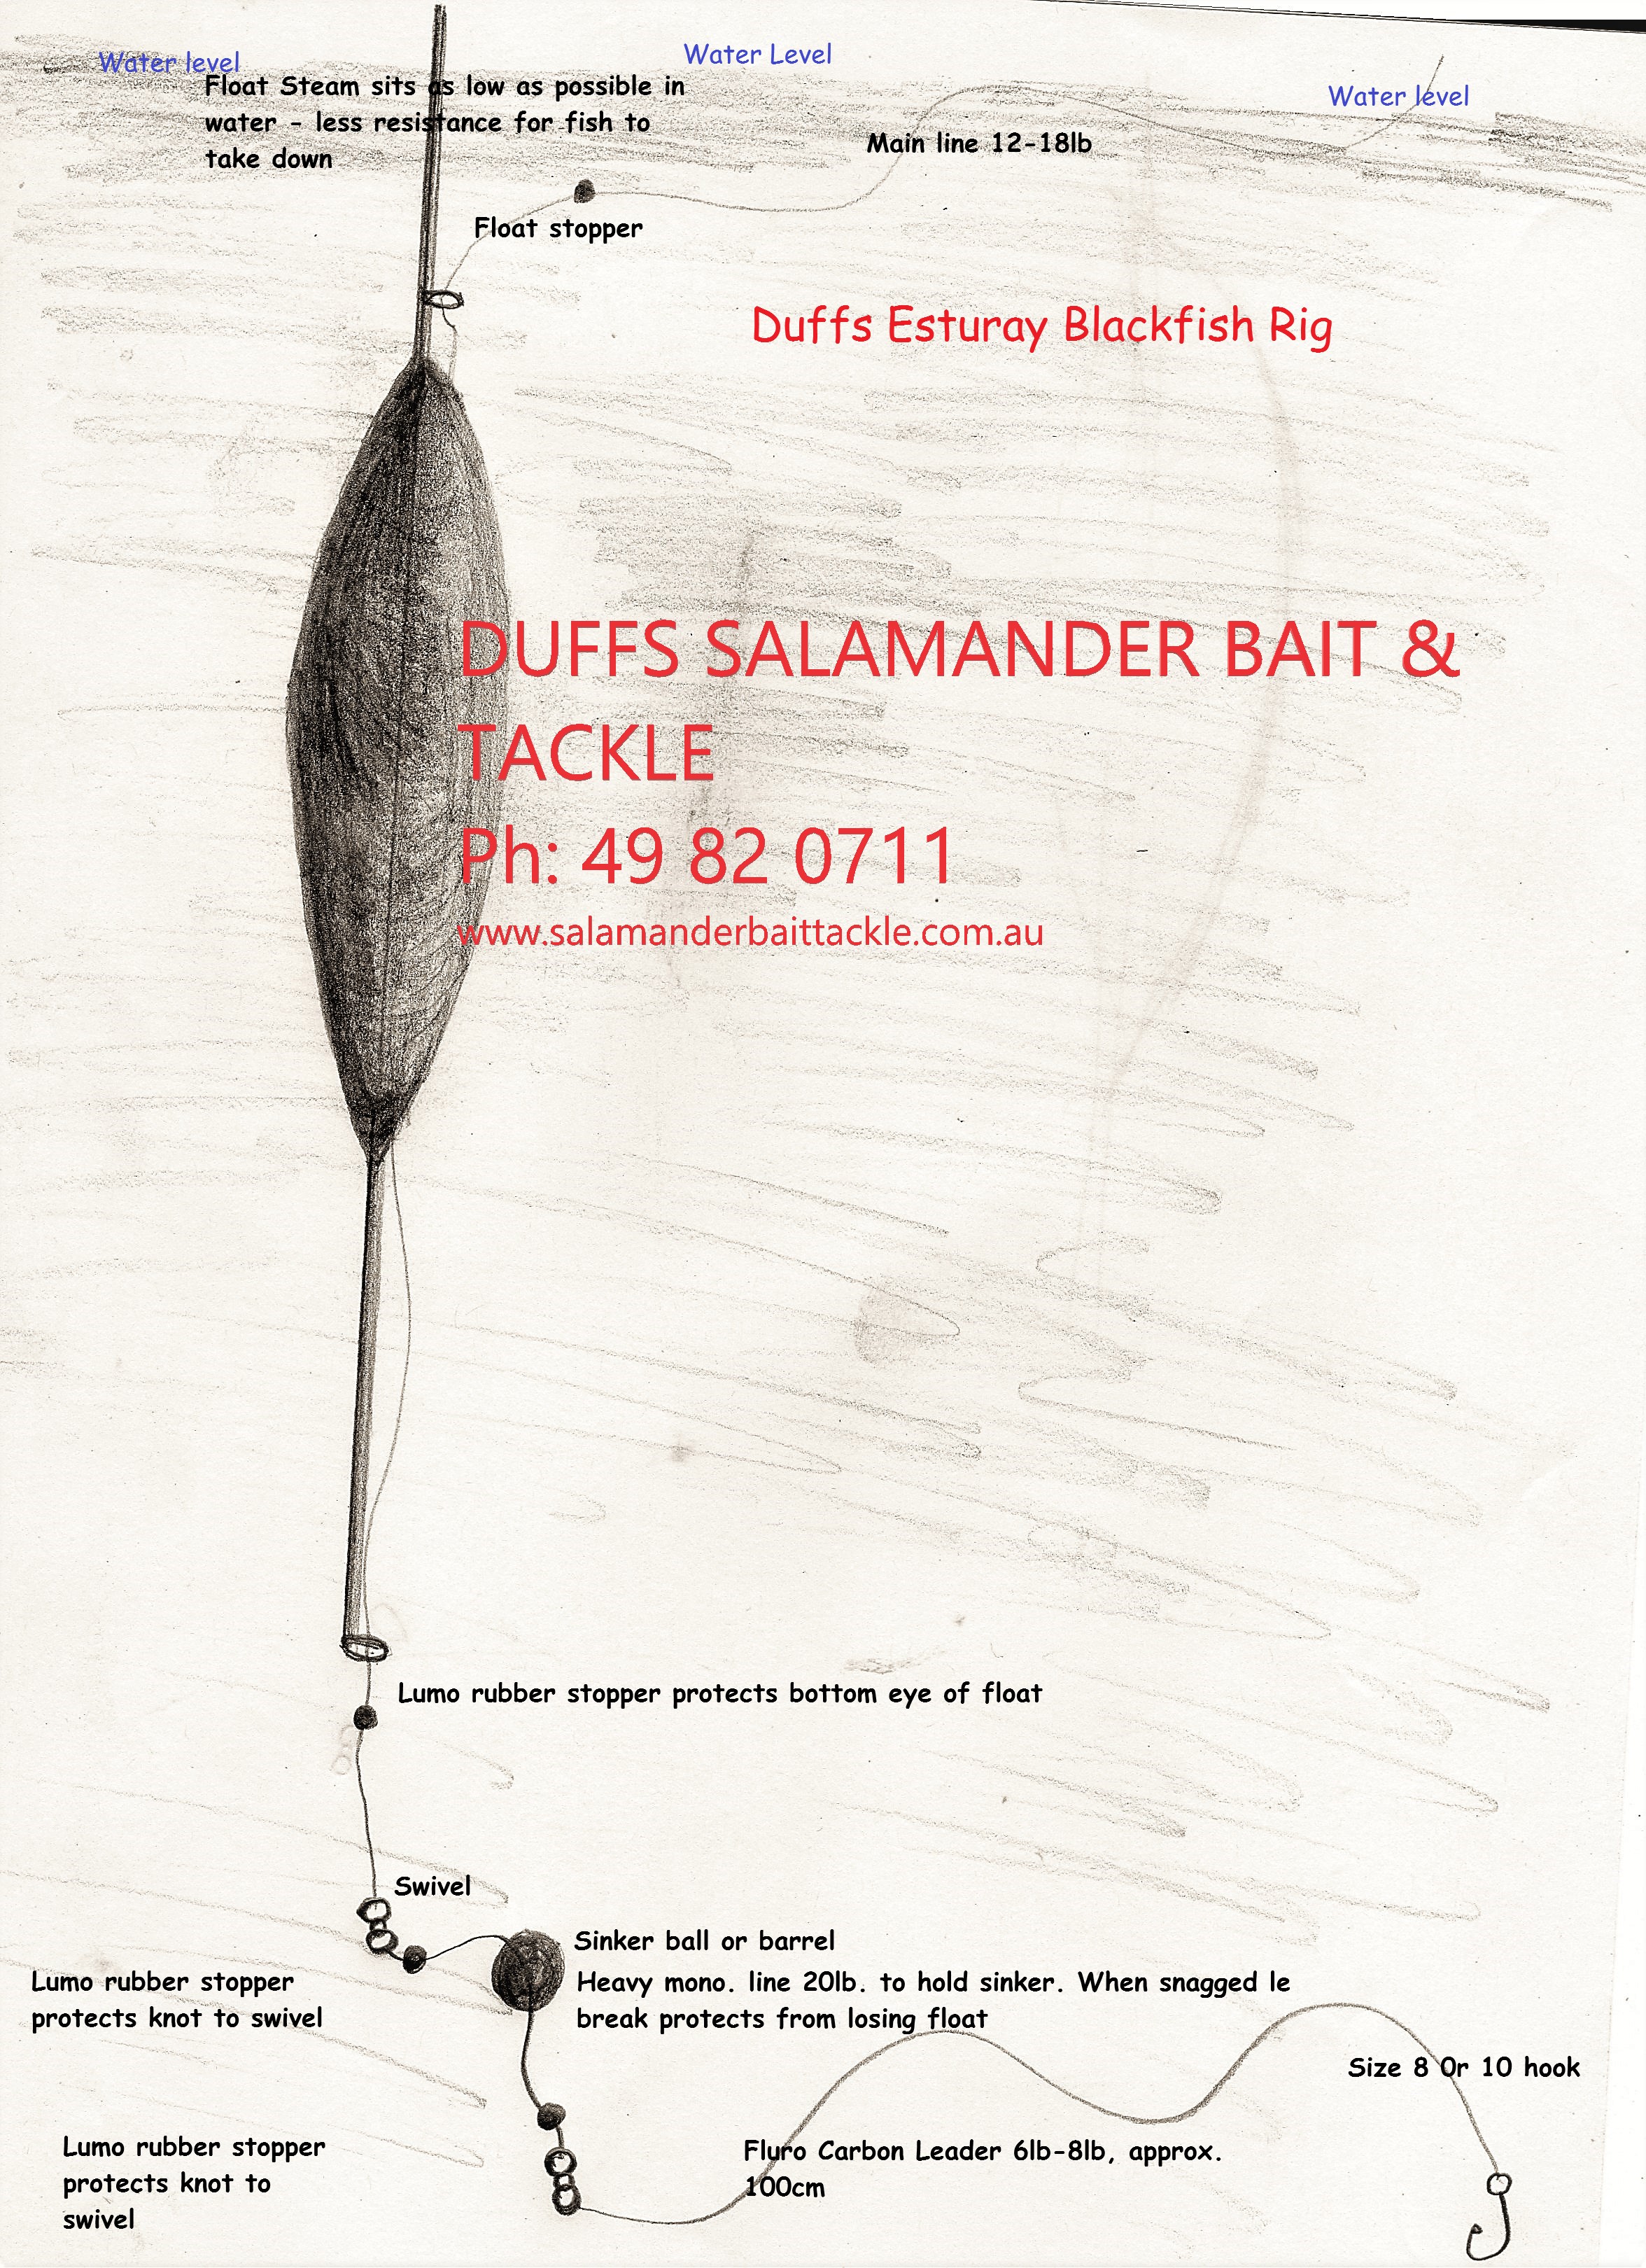 Duffs Estuary Blackfish Rig – Duff's Salamander Bay Bait & Tackle